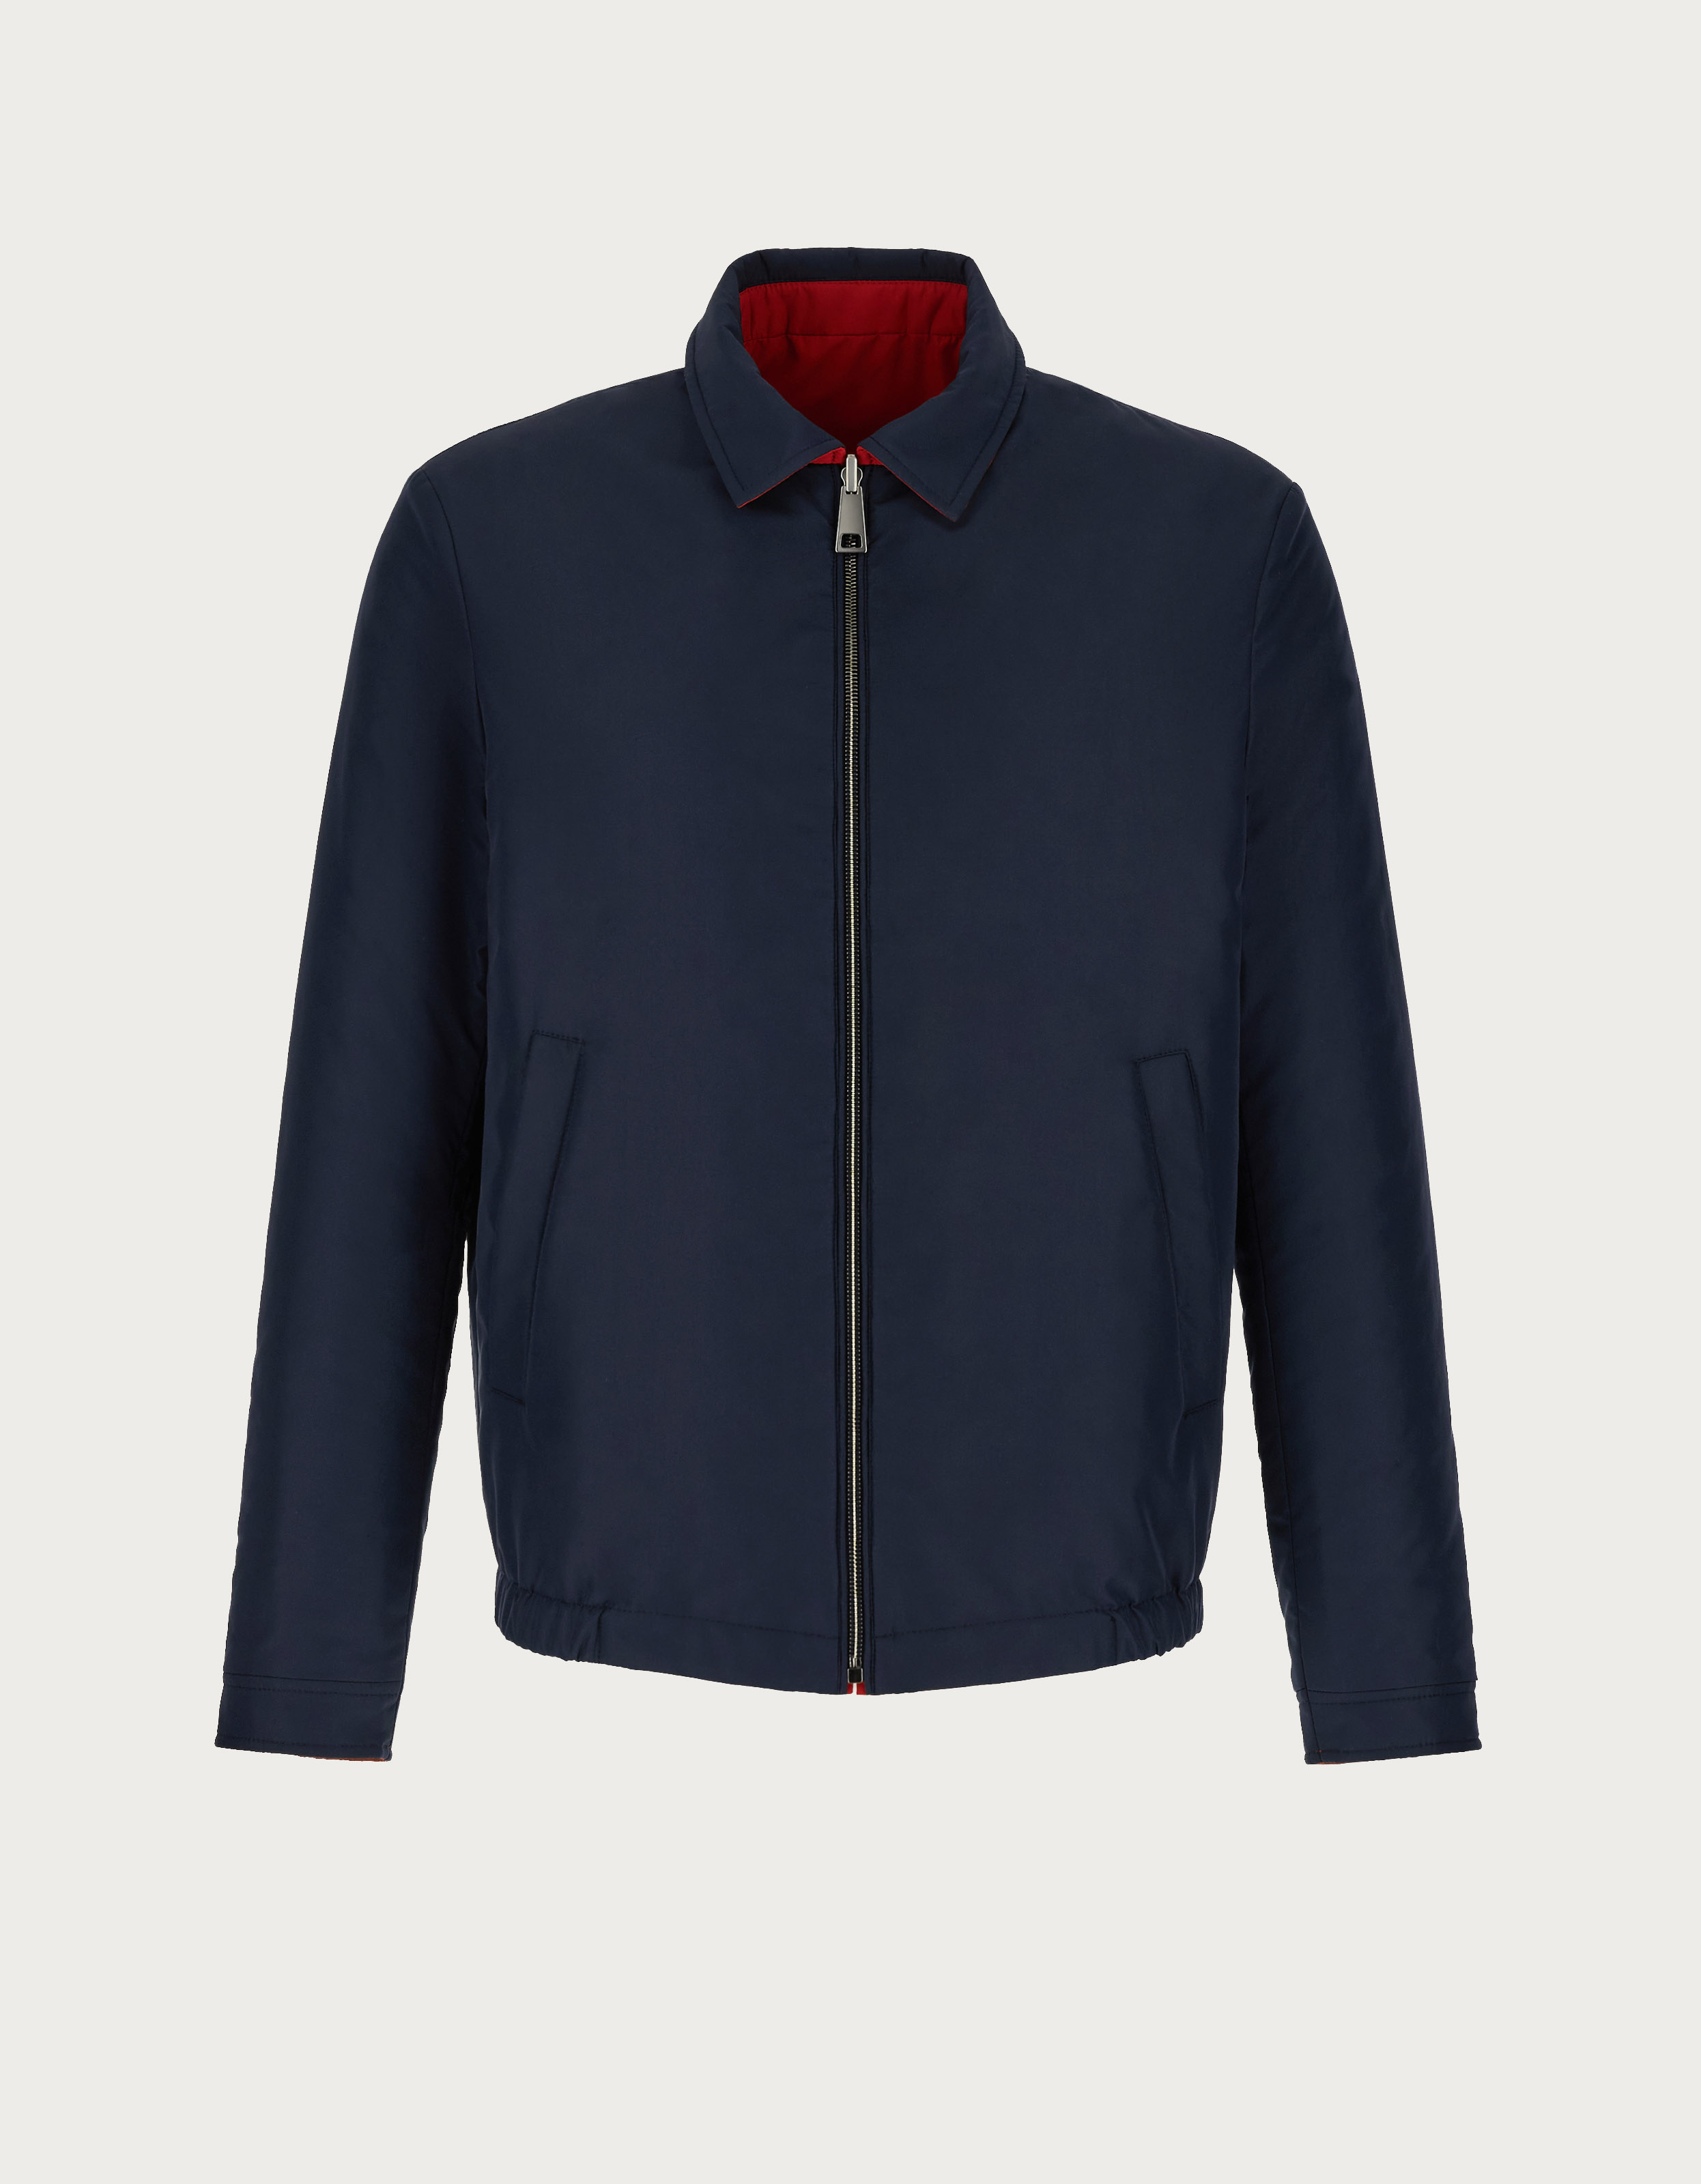 Buy Men Black Solid Casual Jacket Online - 715304